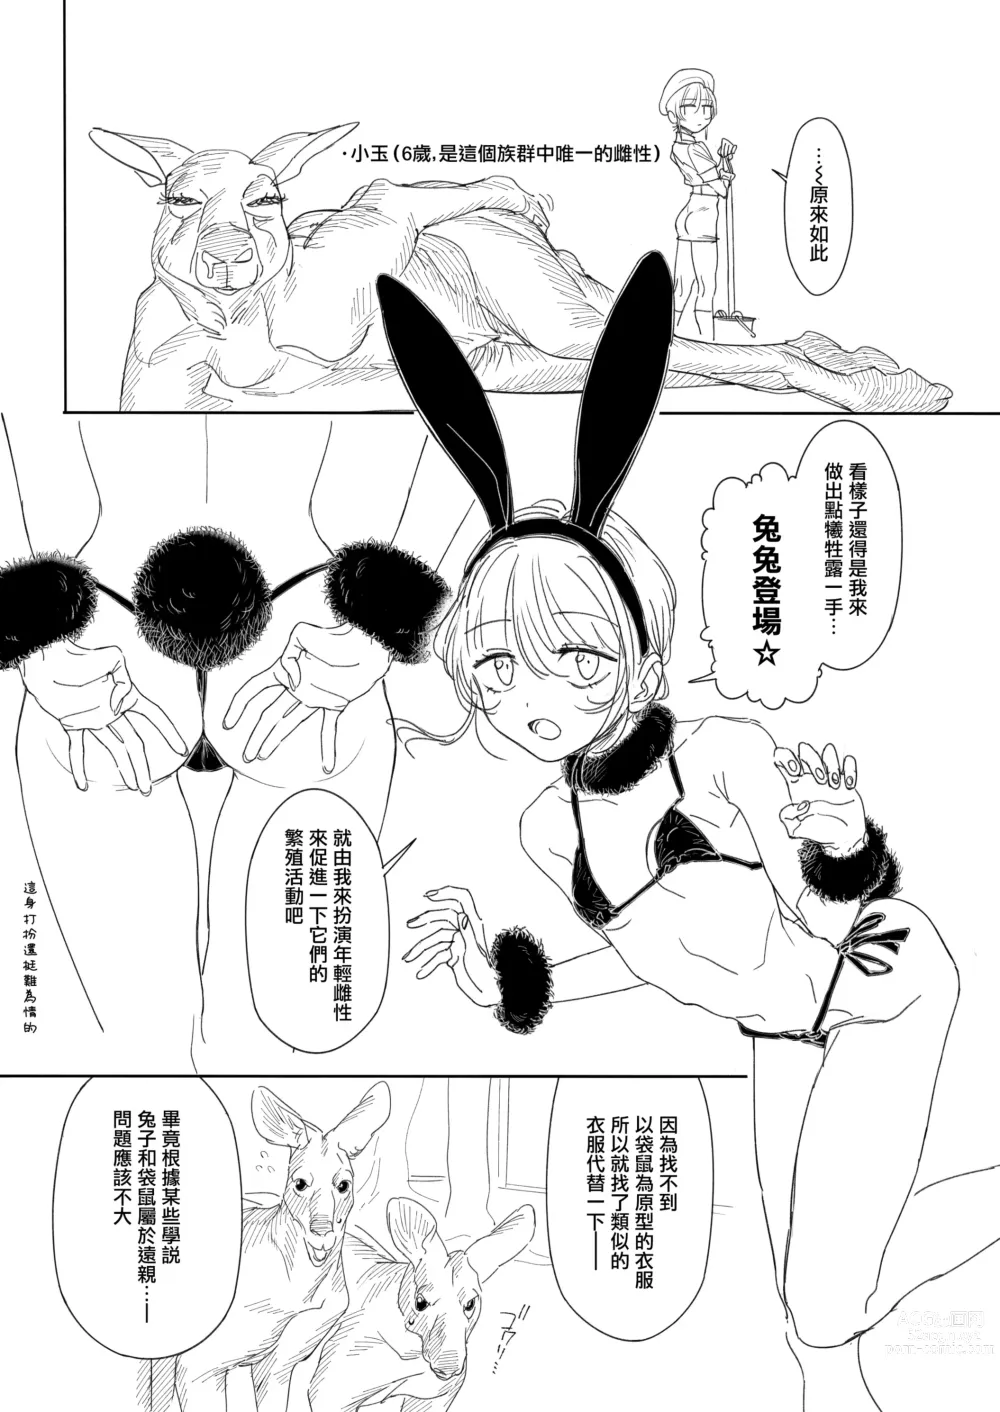 Page 4 of doujinshi Kangaroo no Kimochi Ii